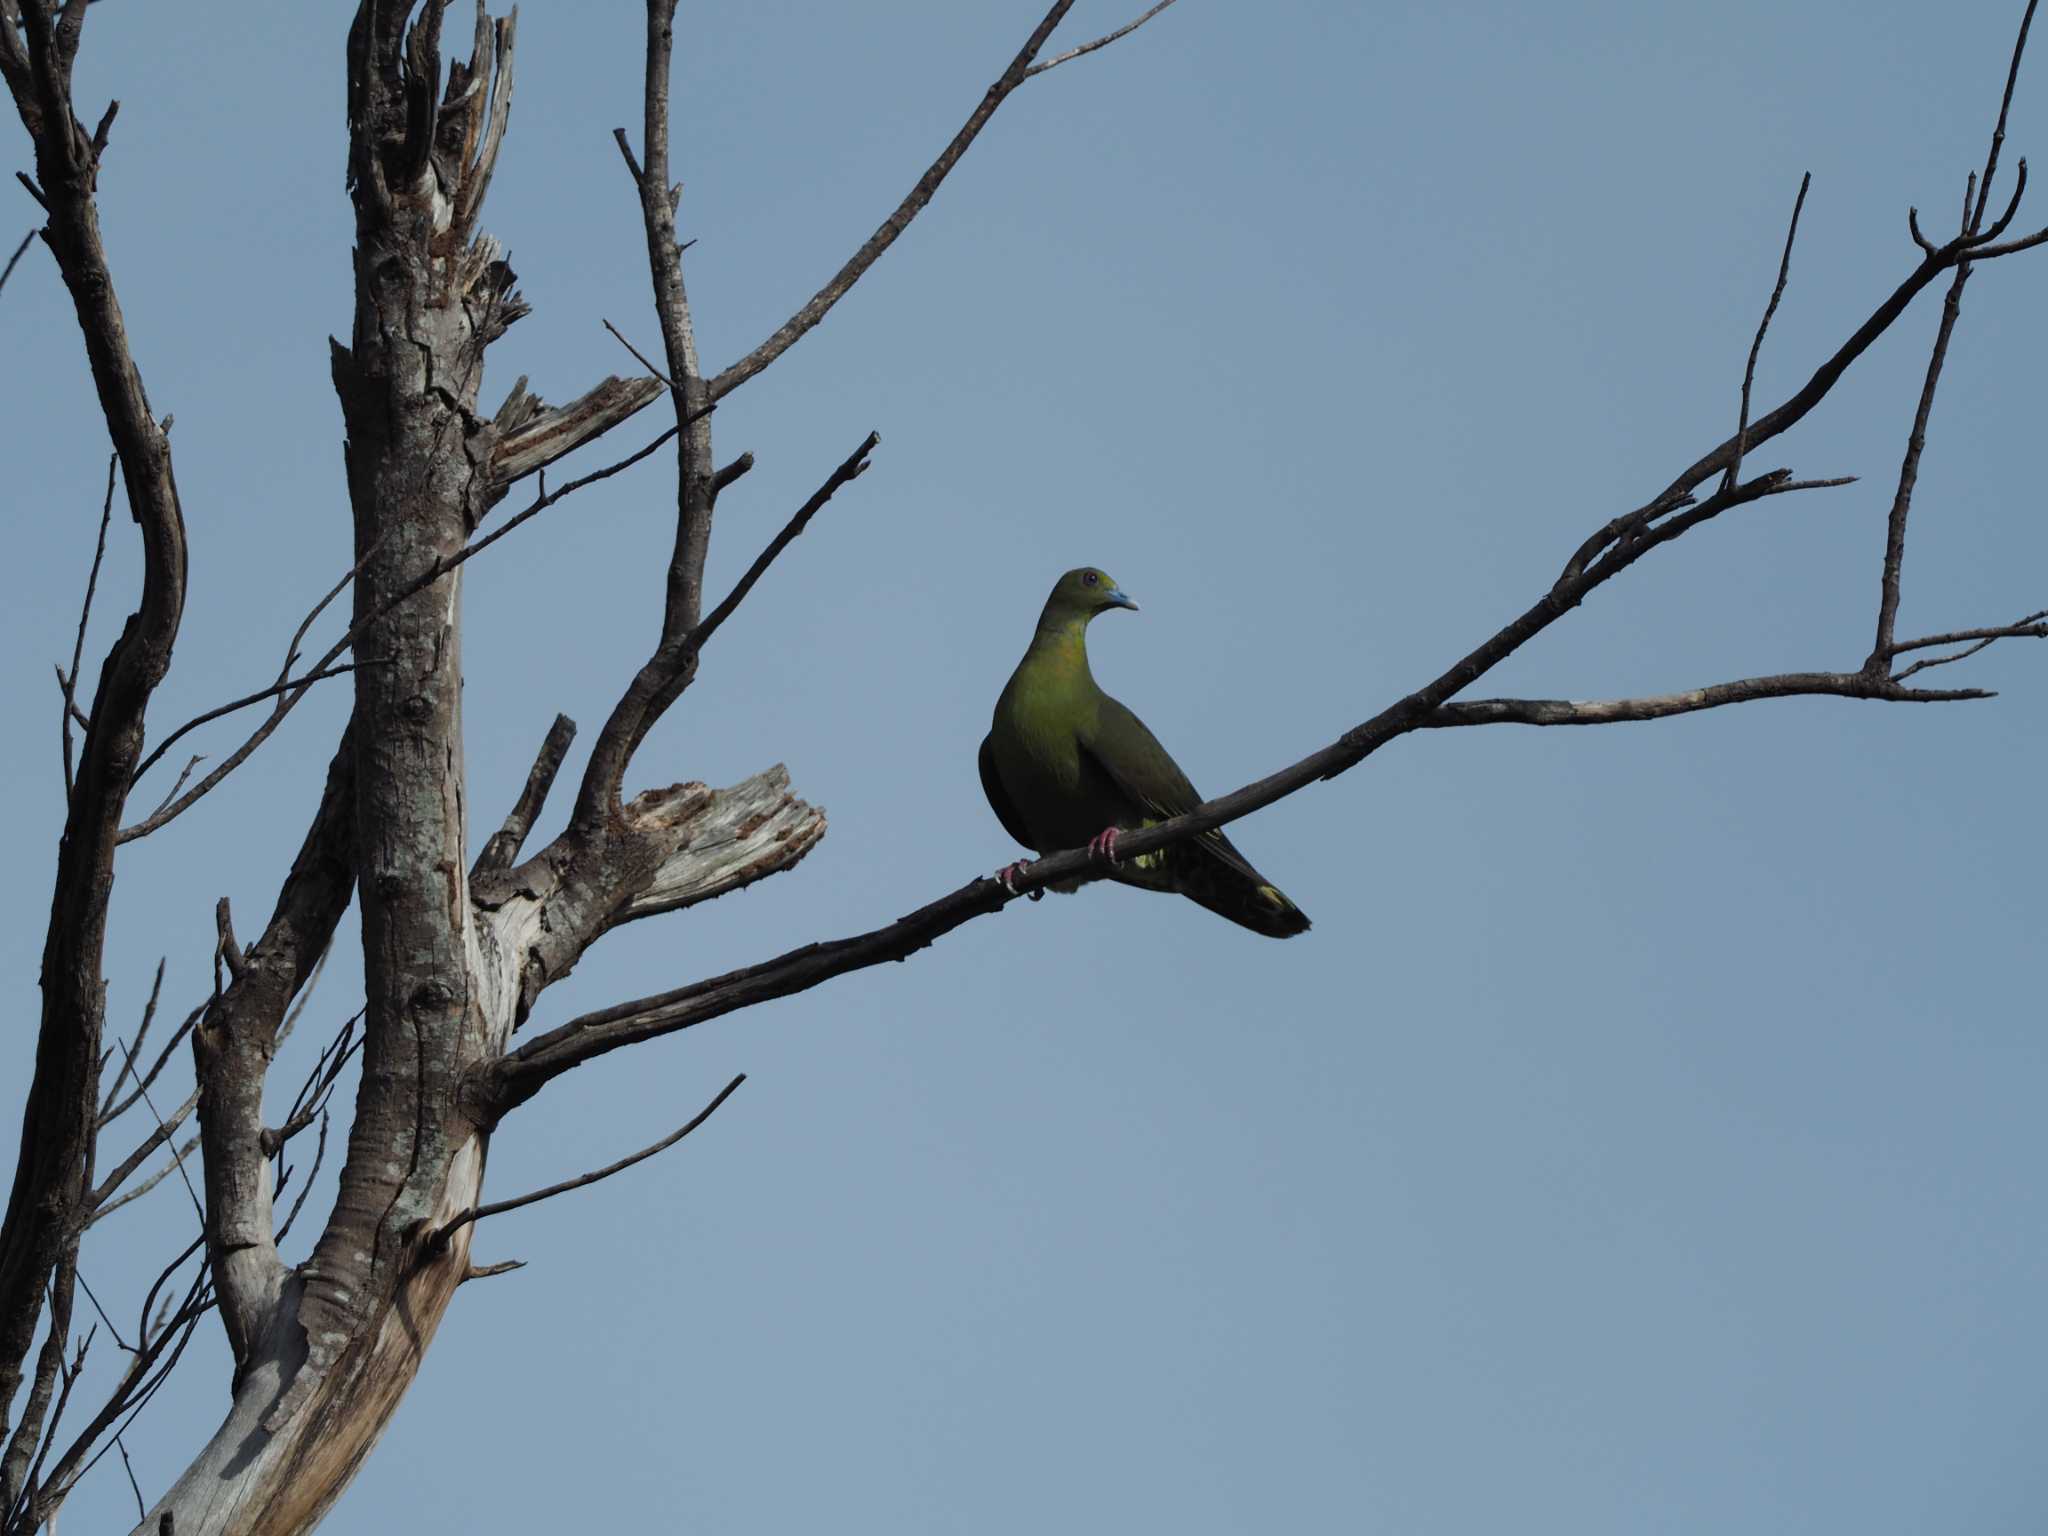 Photo of Ryukyu Green Pigeon at Ishigaki Island by ハイウェーブ